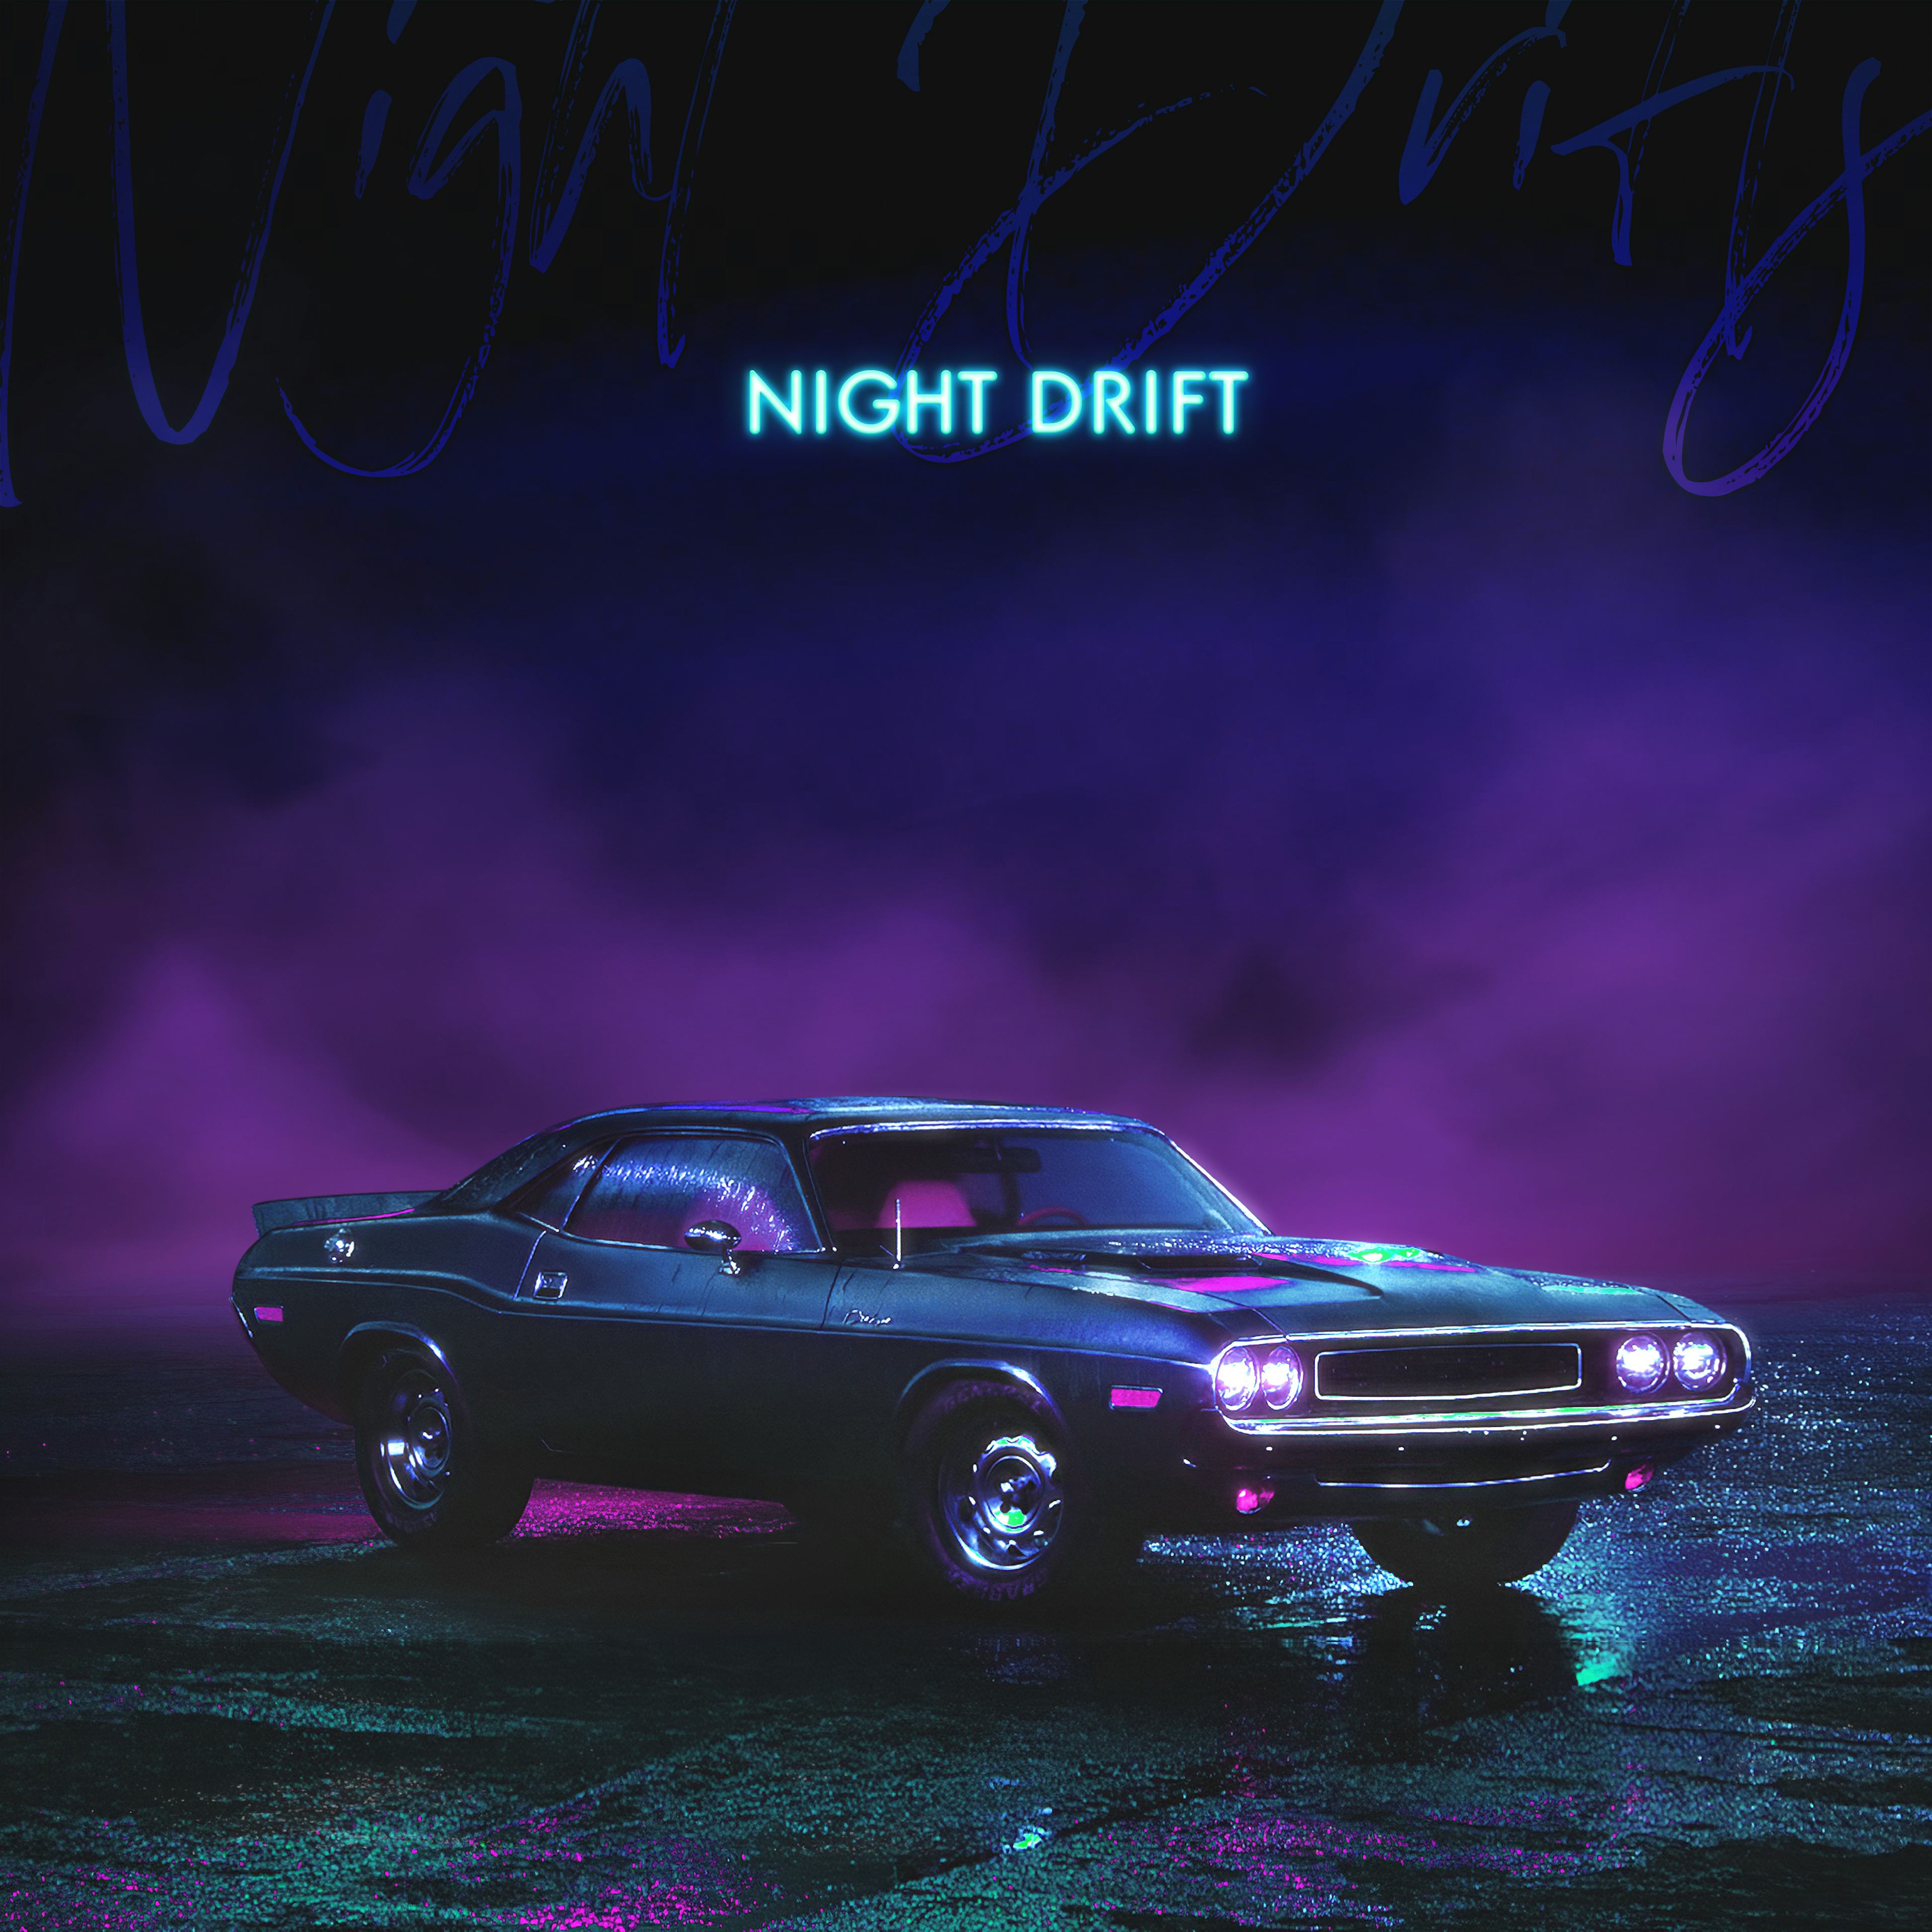 Night Drift artwork